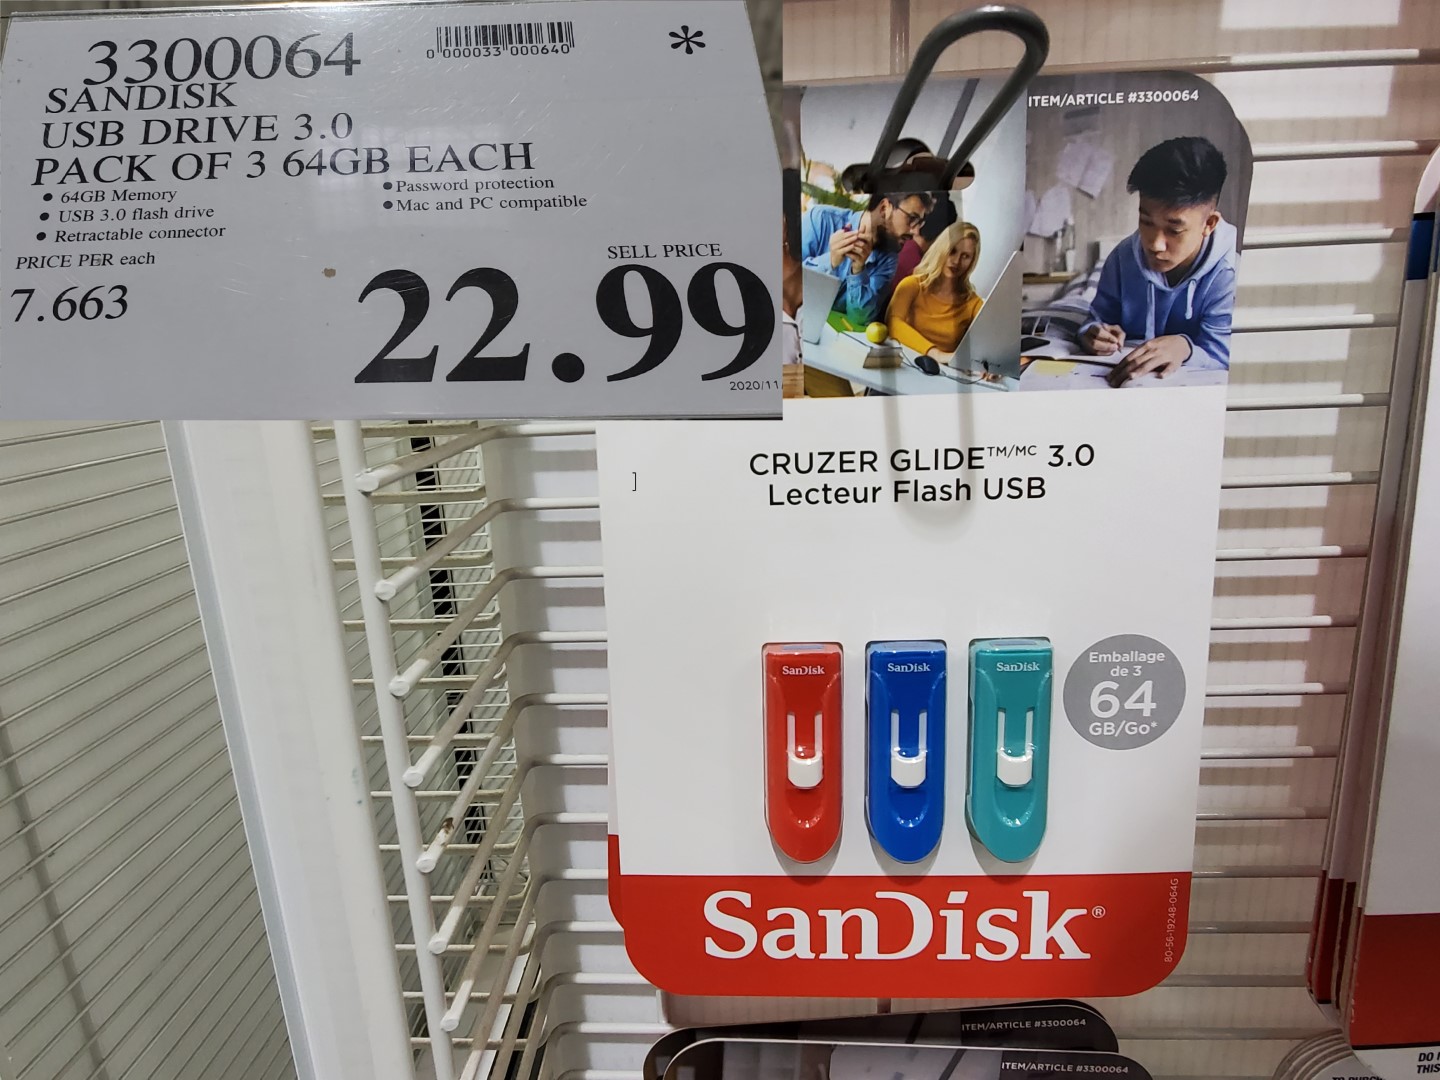 sandisk USB 3.0 drive